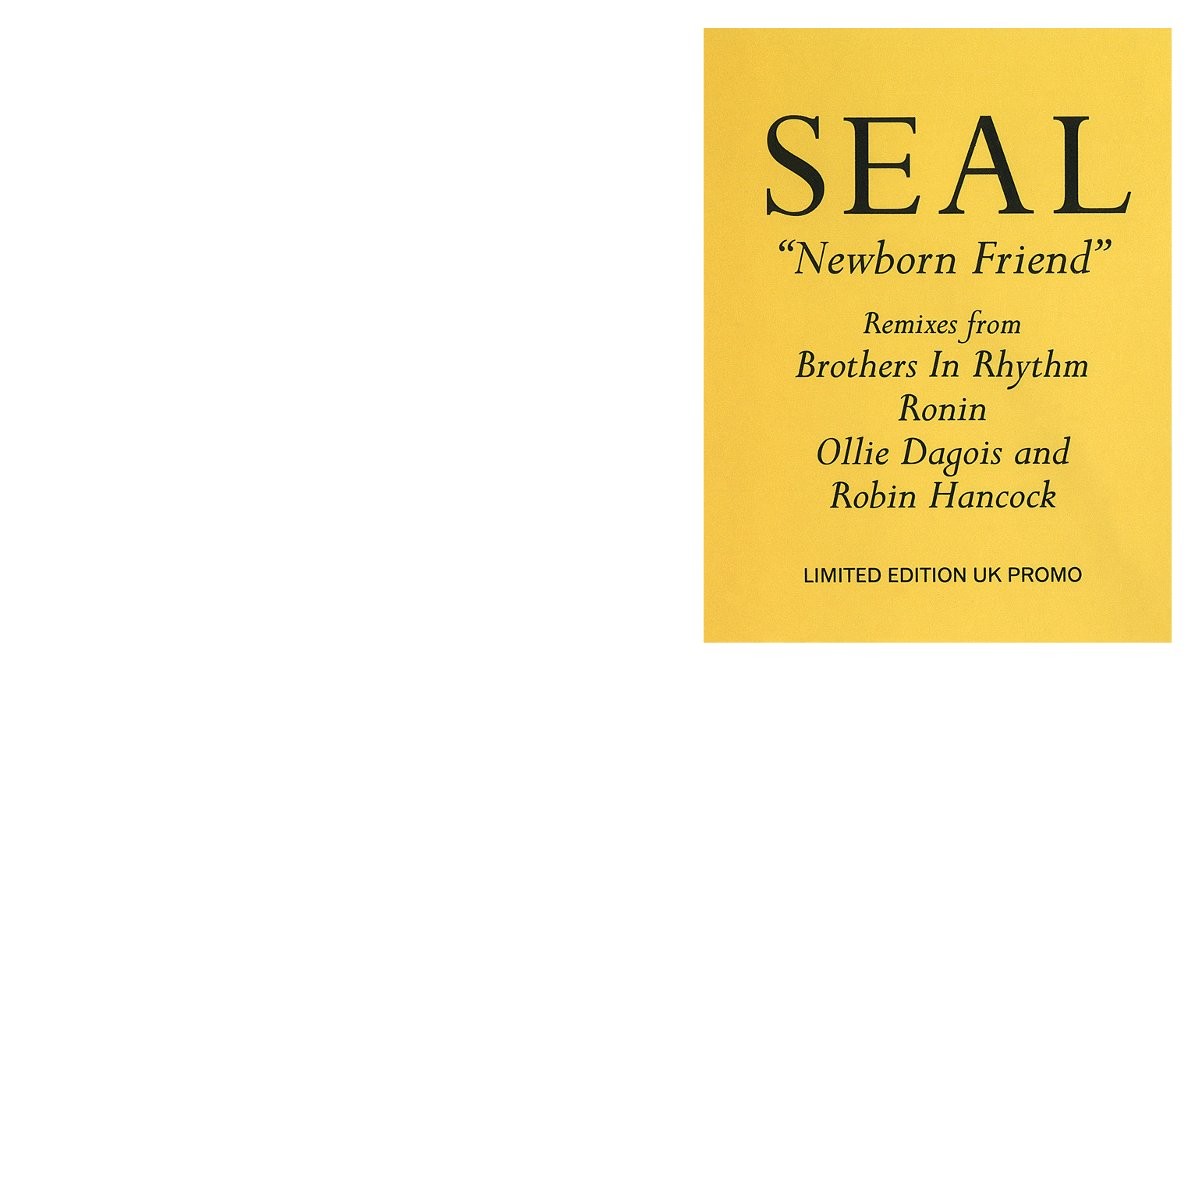 Seal - Newborn friend (Brothers In Rhythm Mix / LP Version / Friend For Life Mix / Ronin Mix) Vinyl Promo